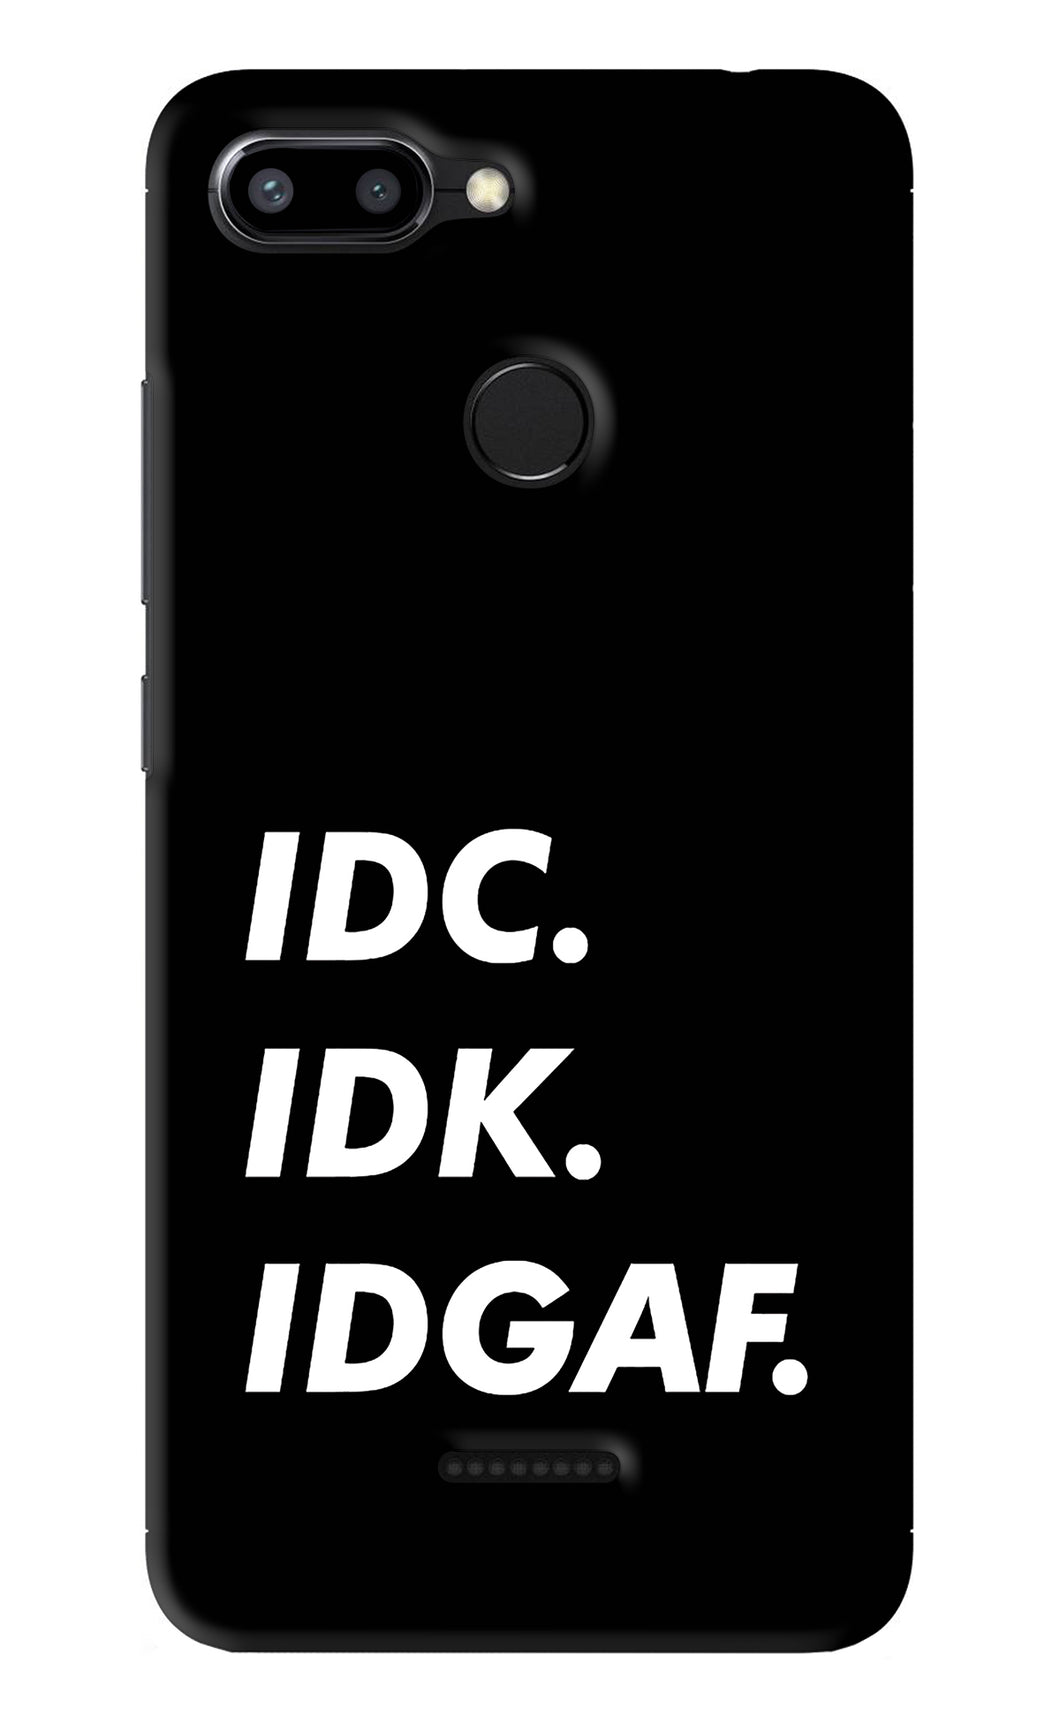 Idc Idk Idgaf Xiaomi Redmi 6 Back Skin Wrap